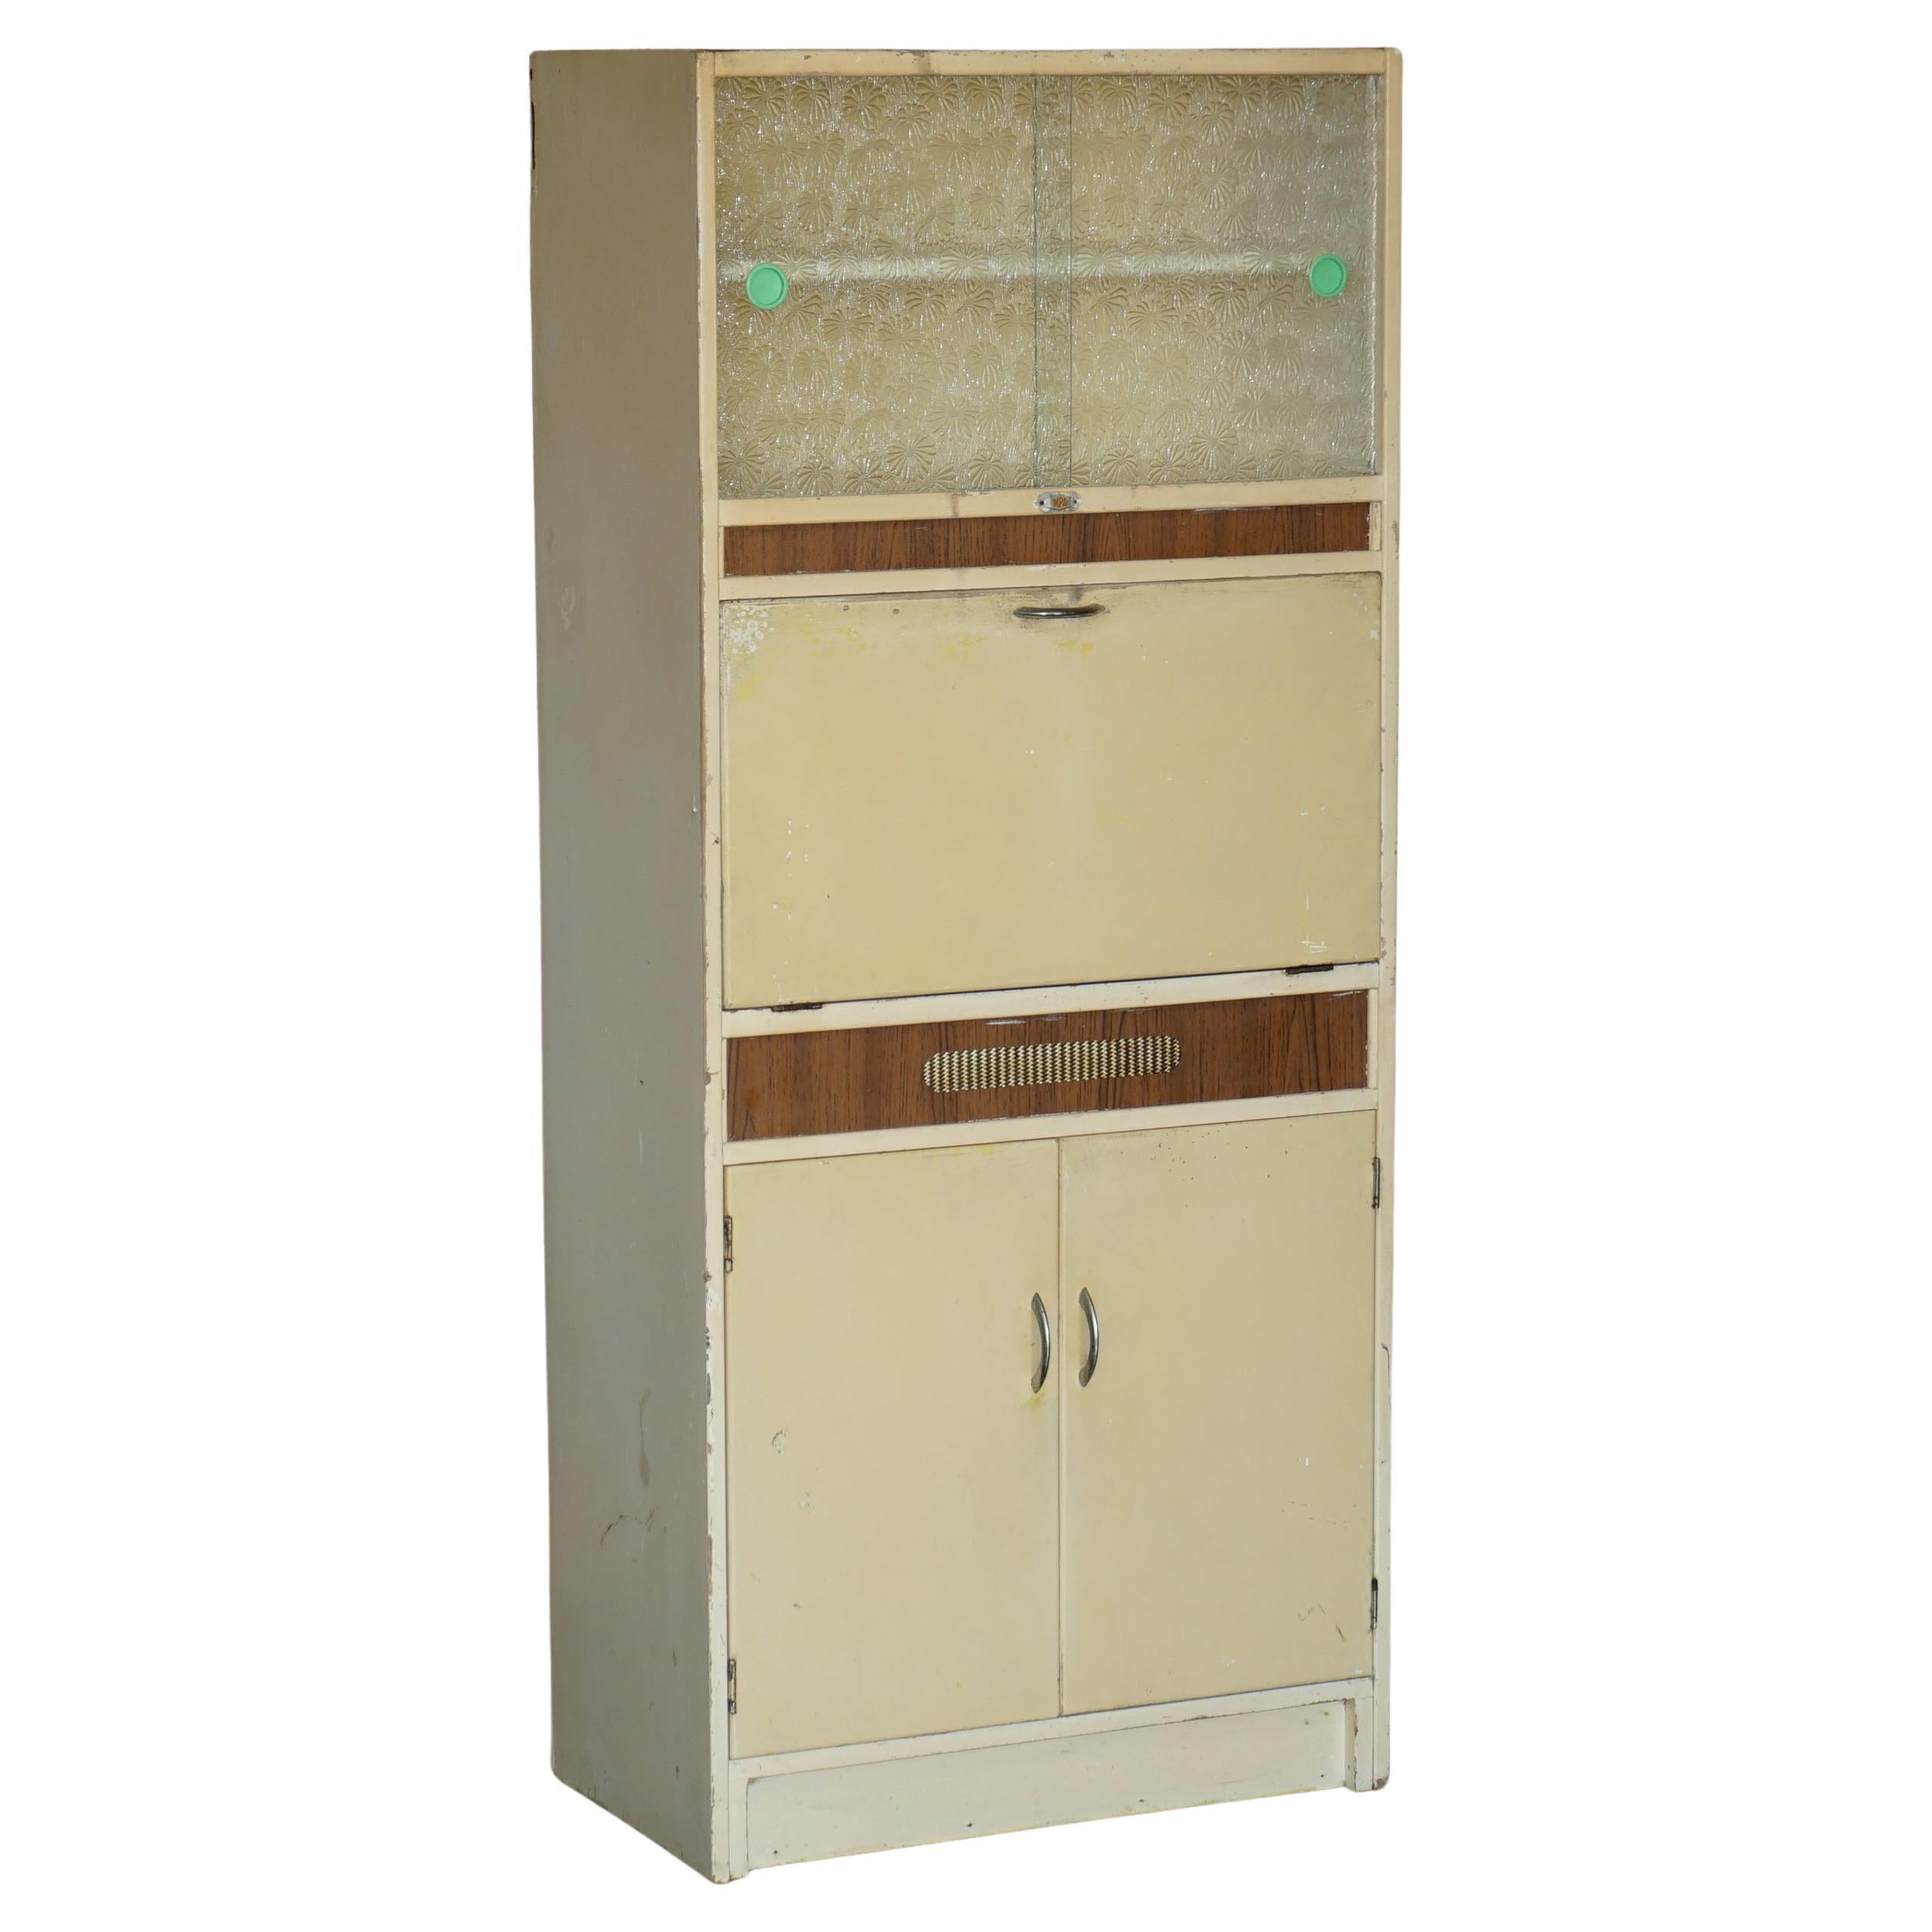 Cool Retro Original 1950's English Kitchen Habberdashery Larda Cupboard Cabinet For Sale